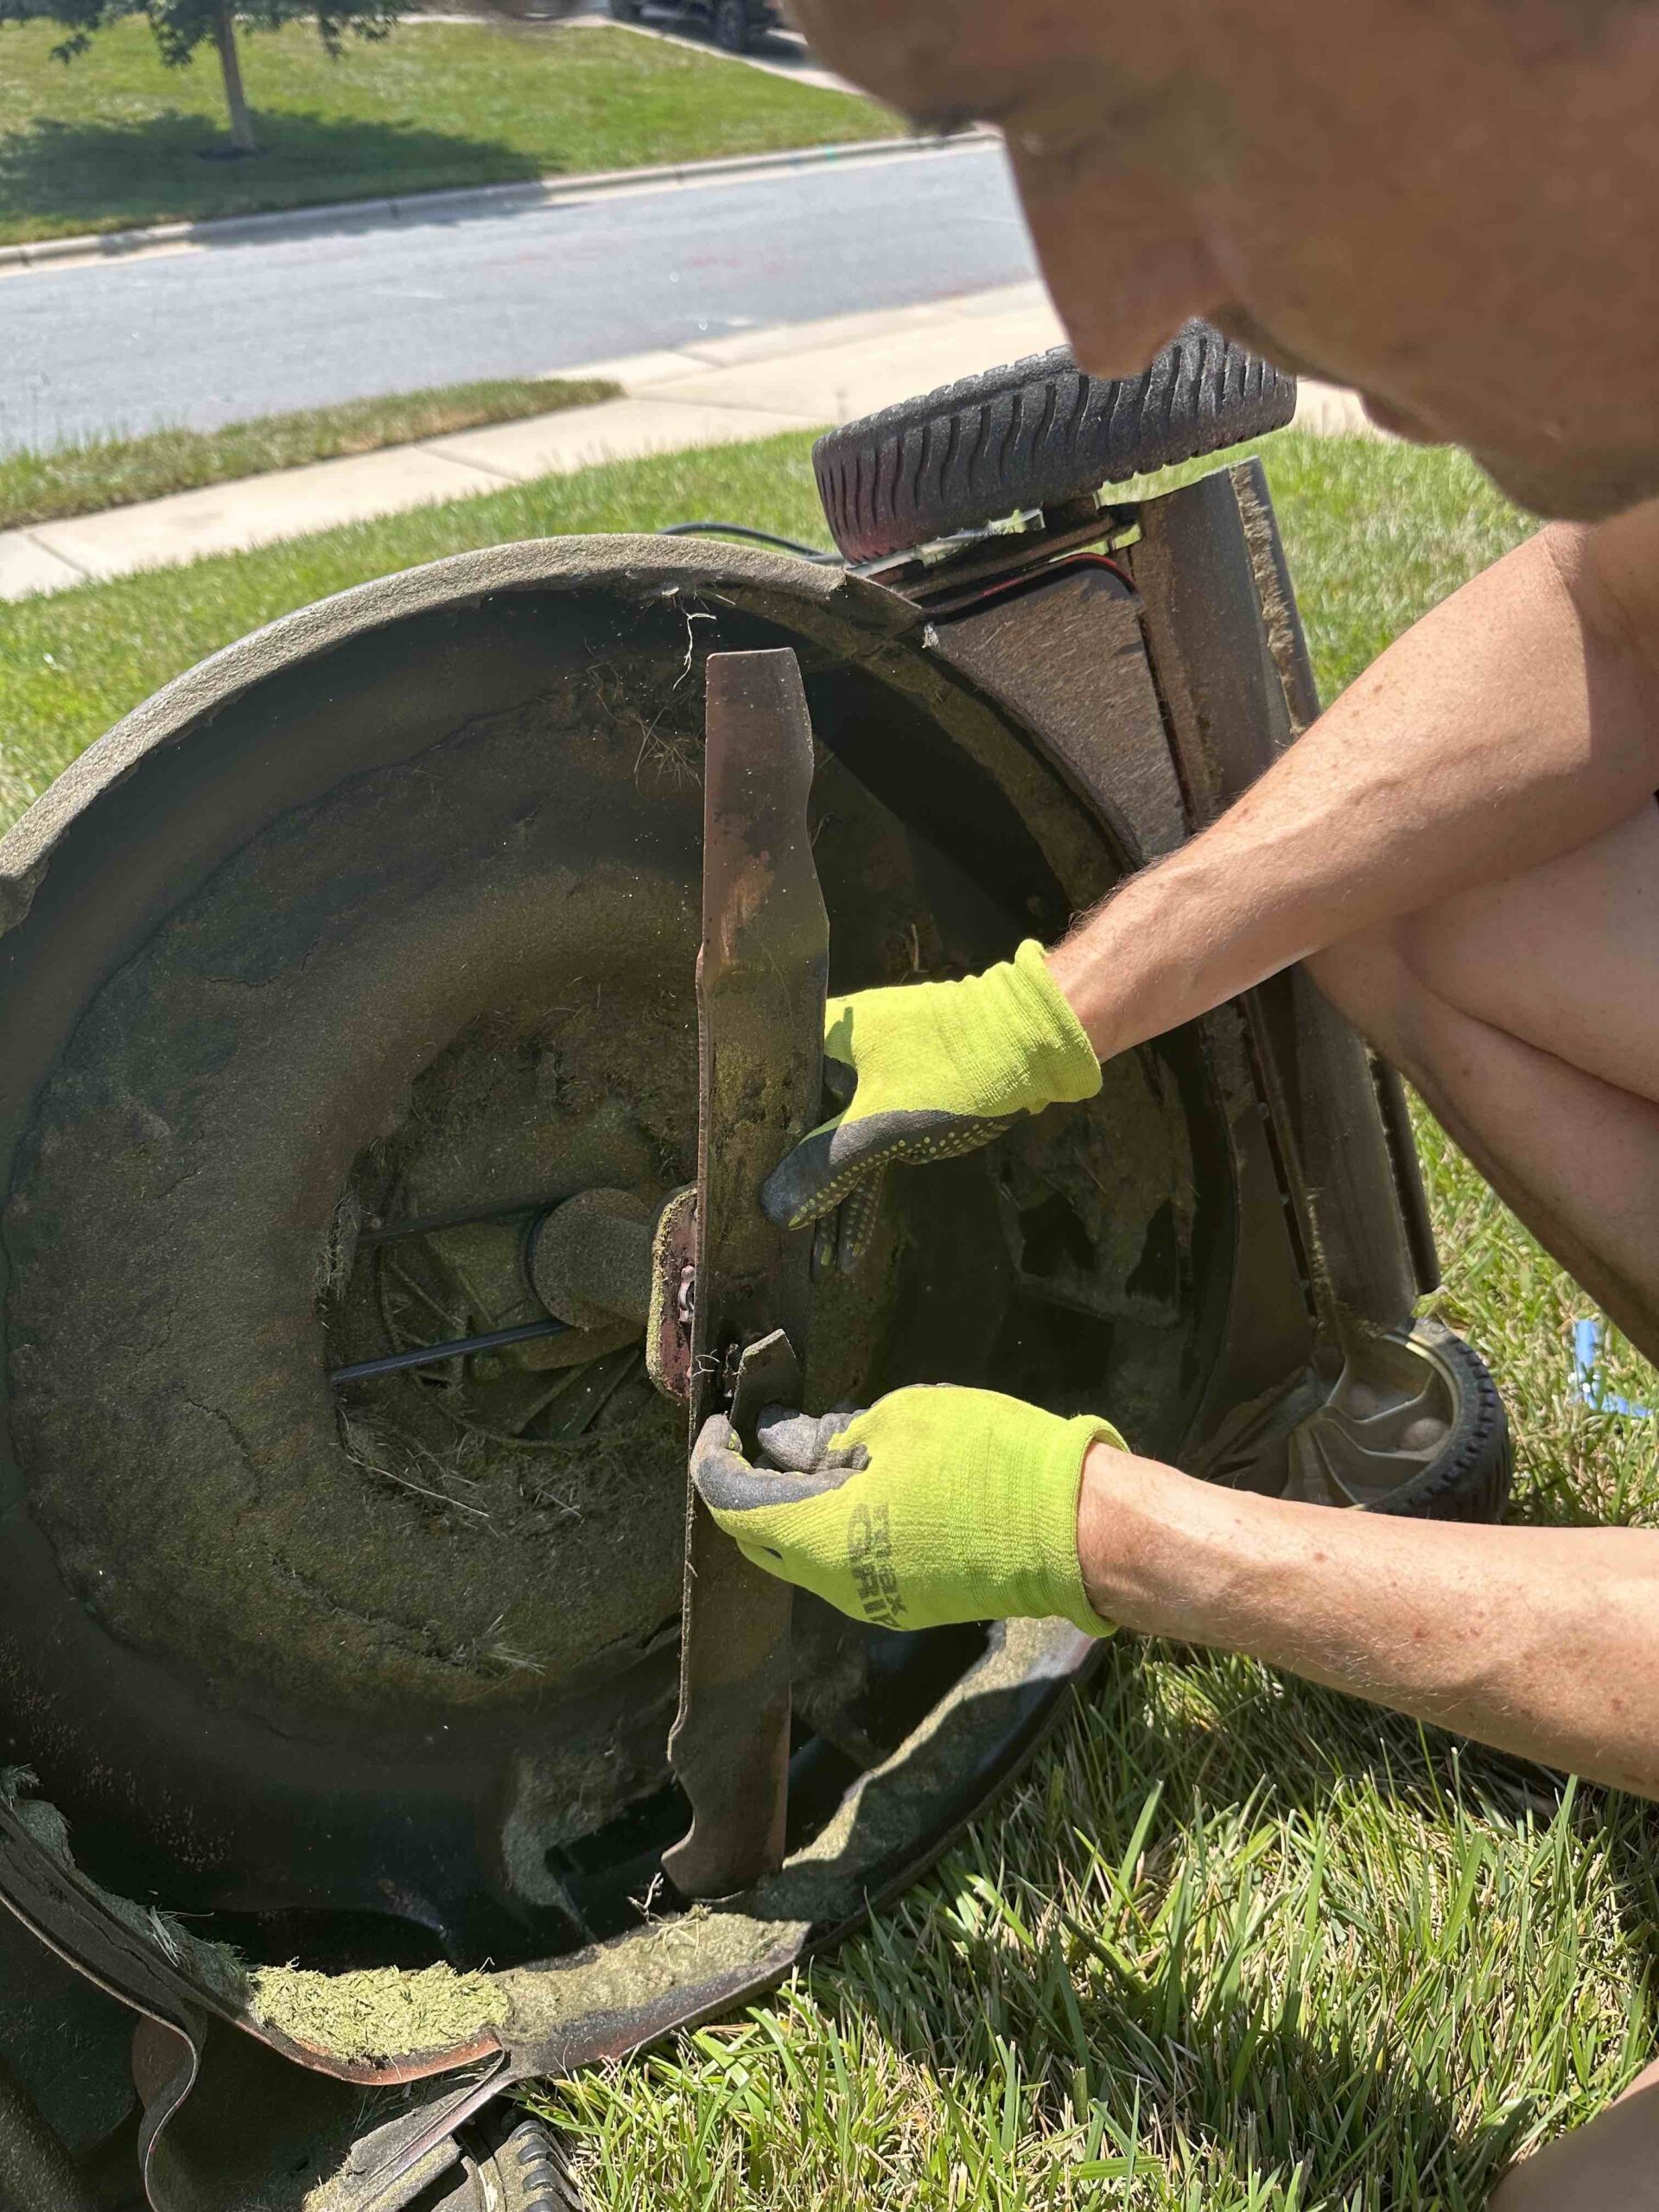 Re-installing lawn mower blade